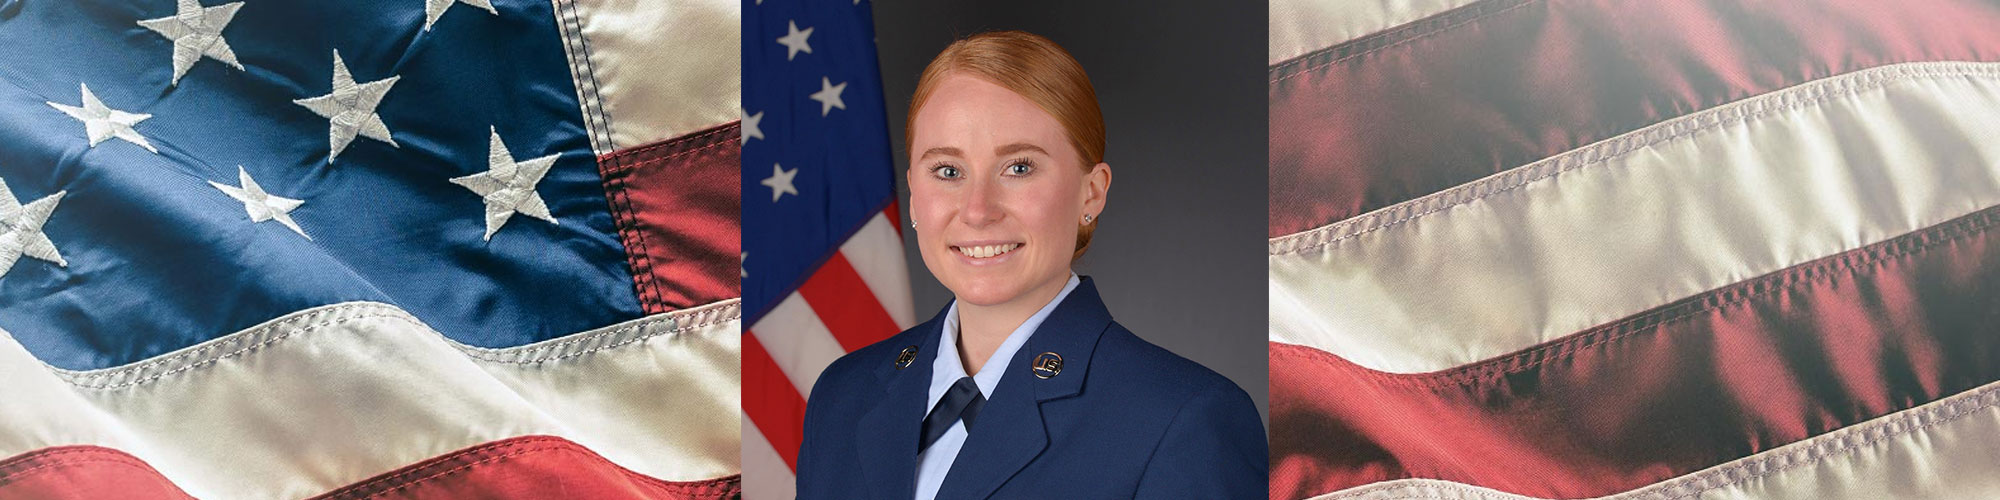 female veteran in uniform